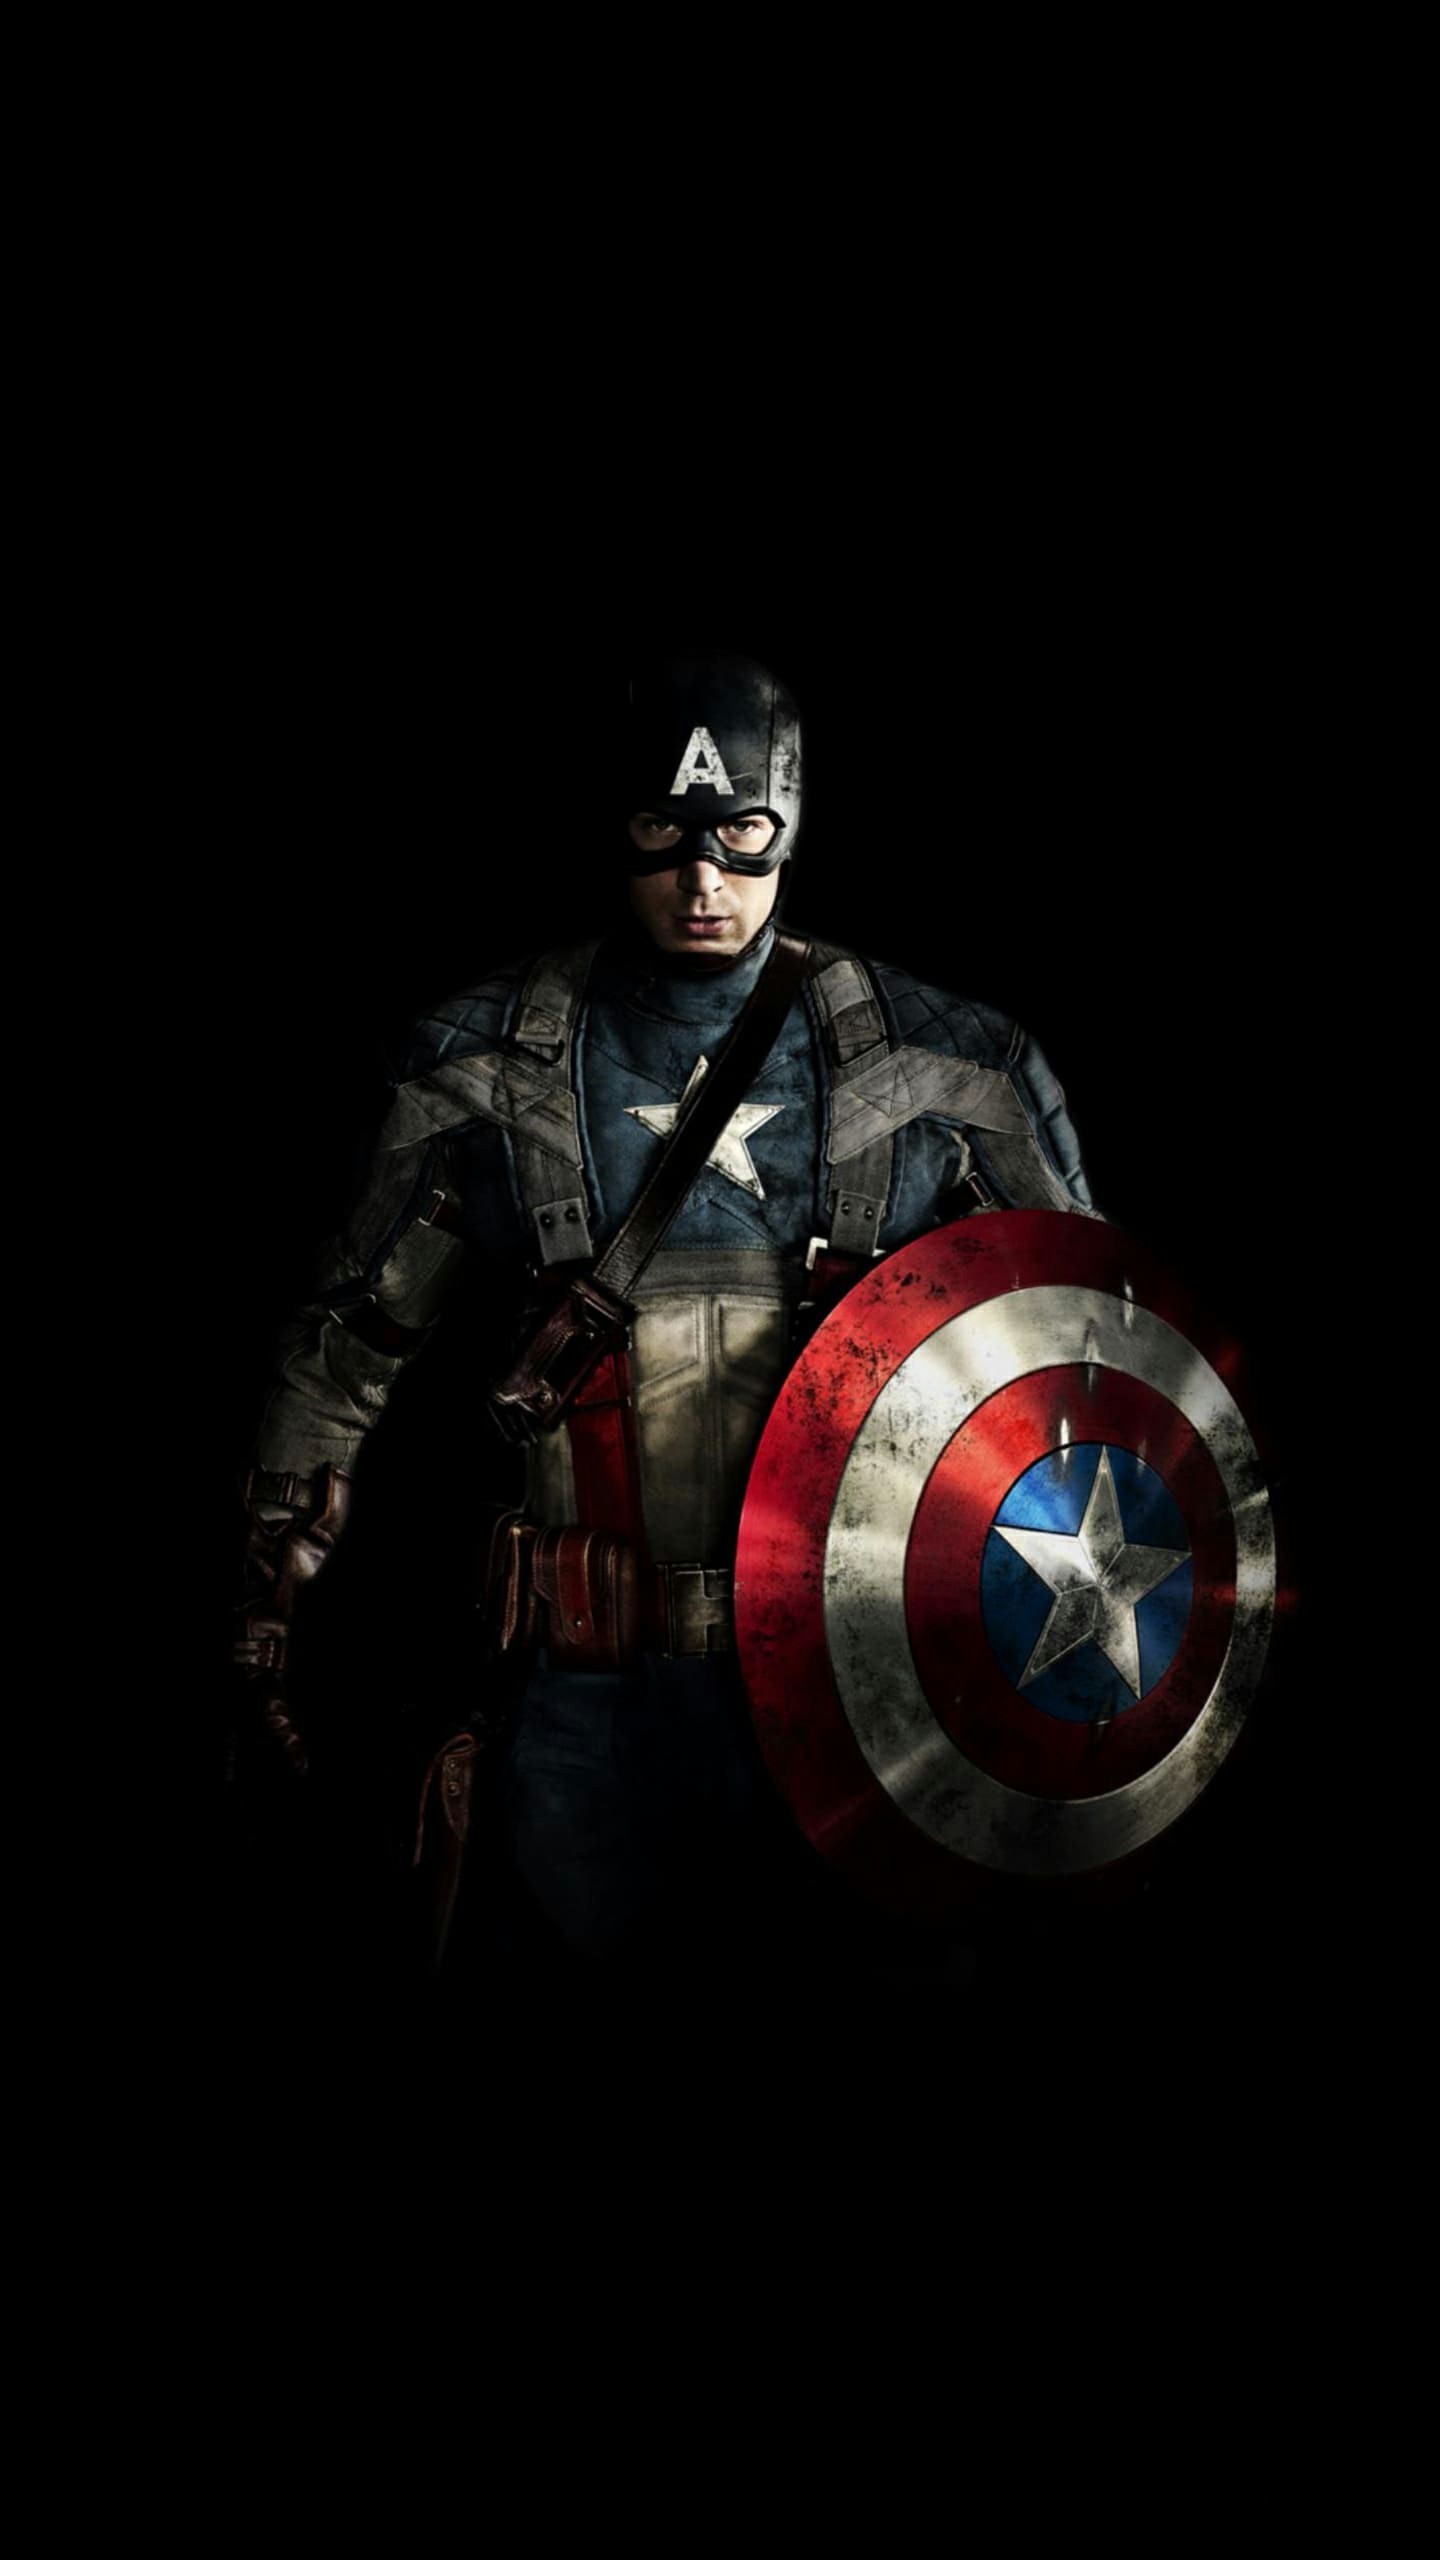 capitan america wallpaper,captain america,superhero,fictional character,action figure,avengers